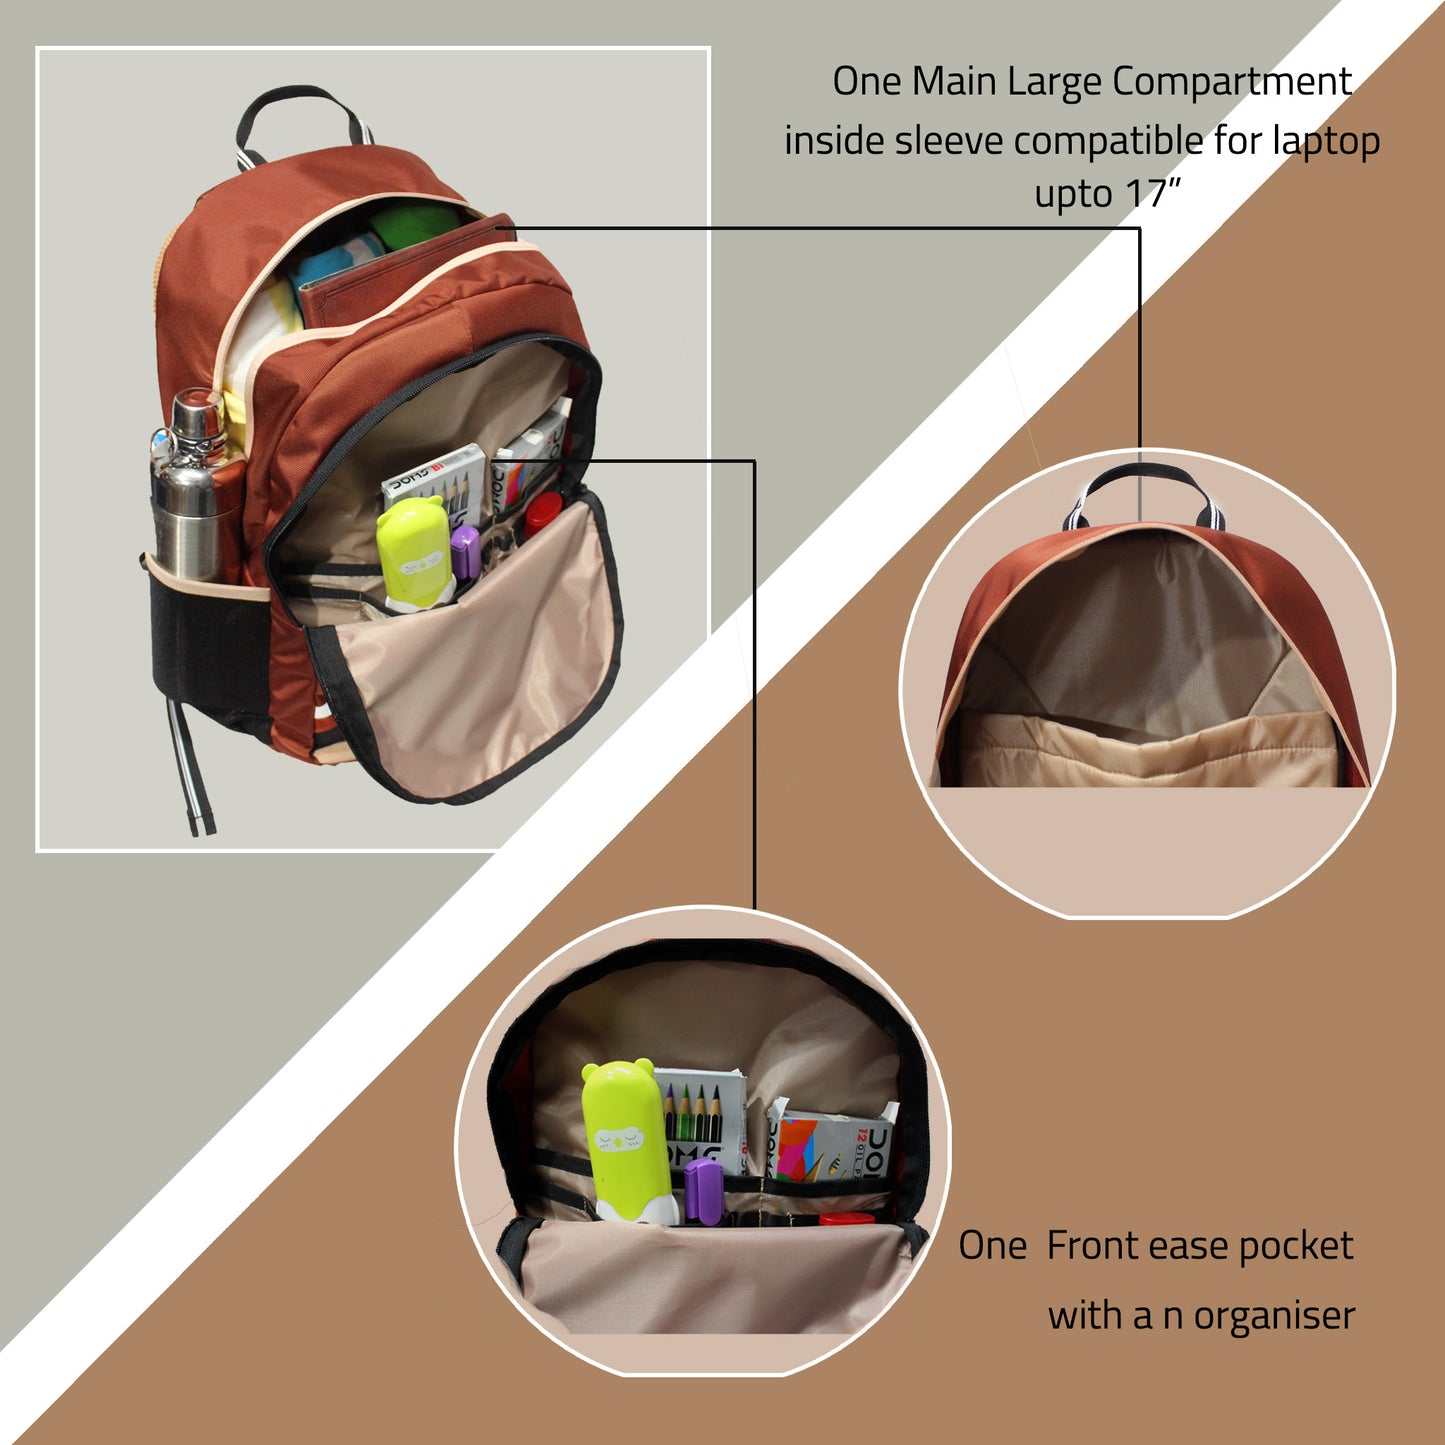 Shigo 24L Picante Skin Backpack